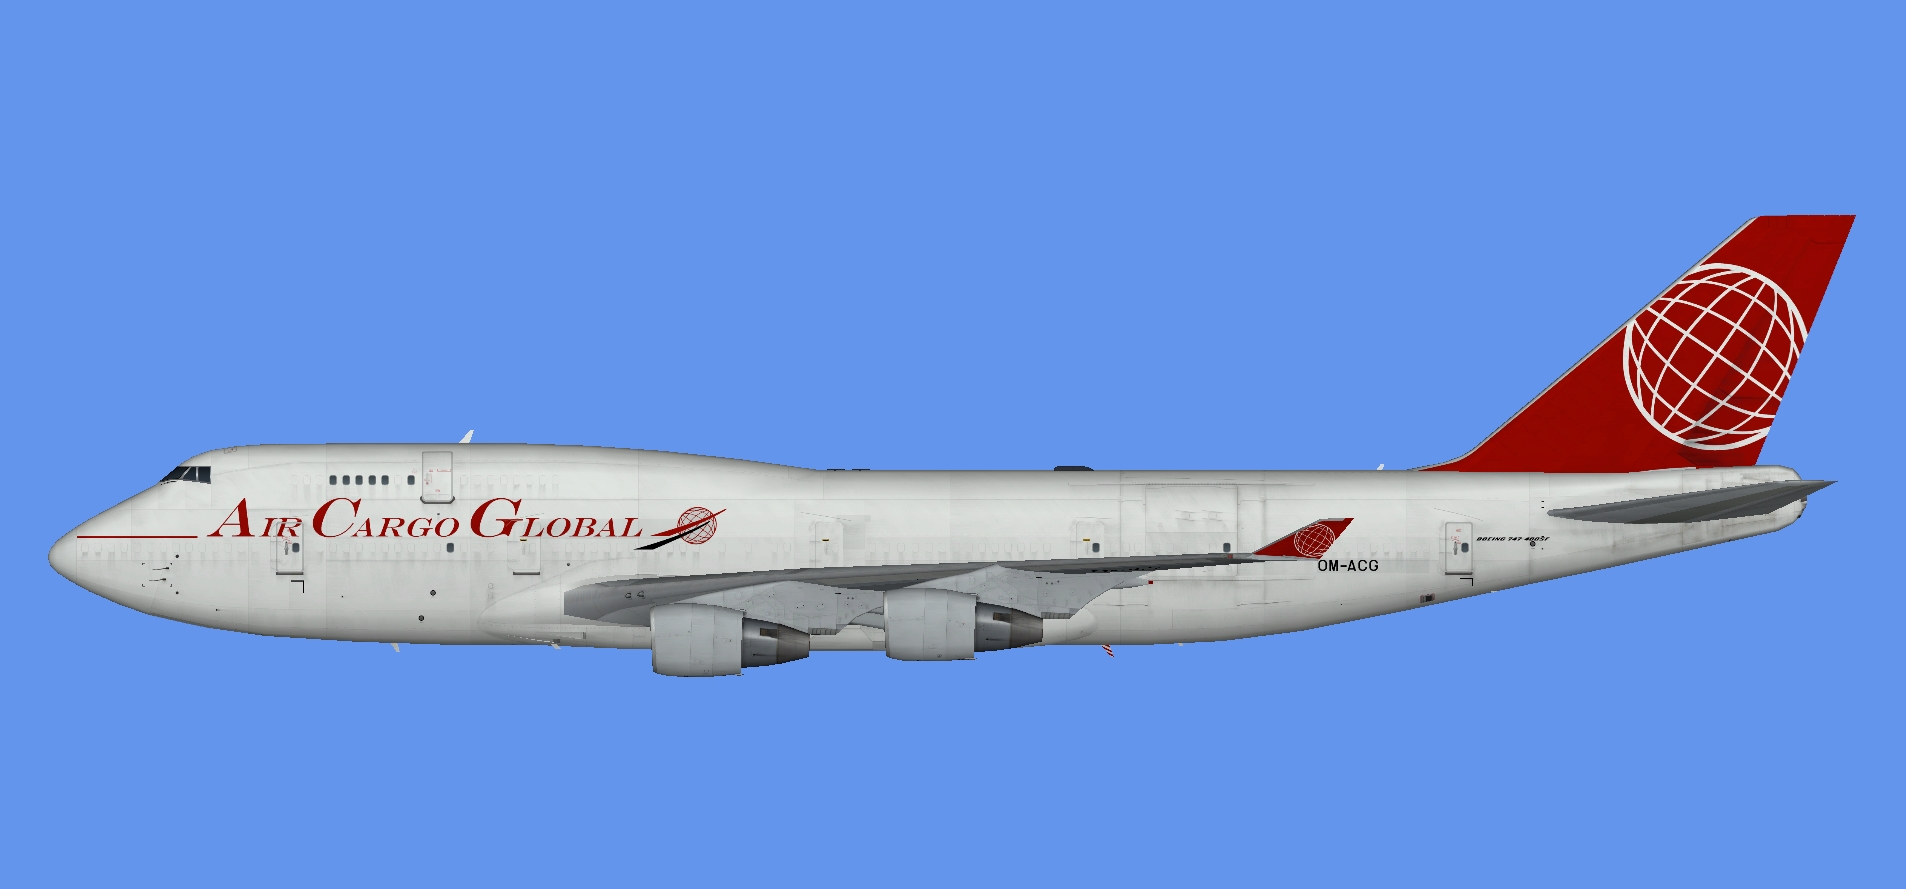 Air Cargo Global Boeing 747-400